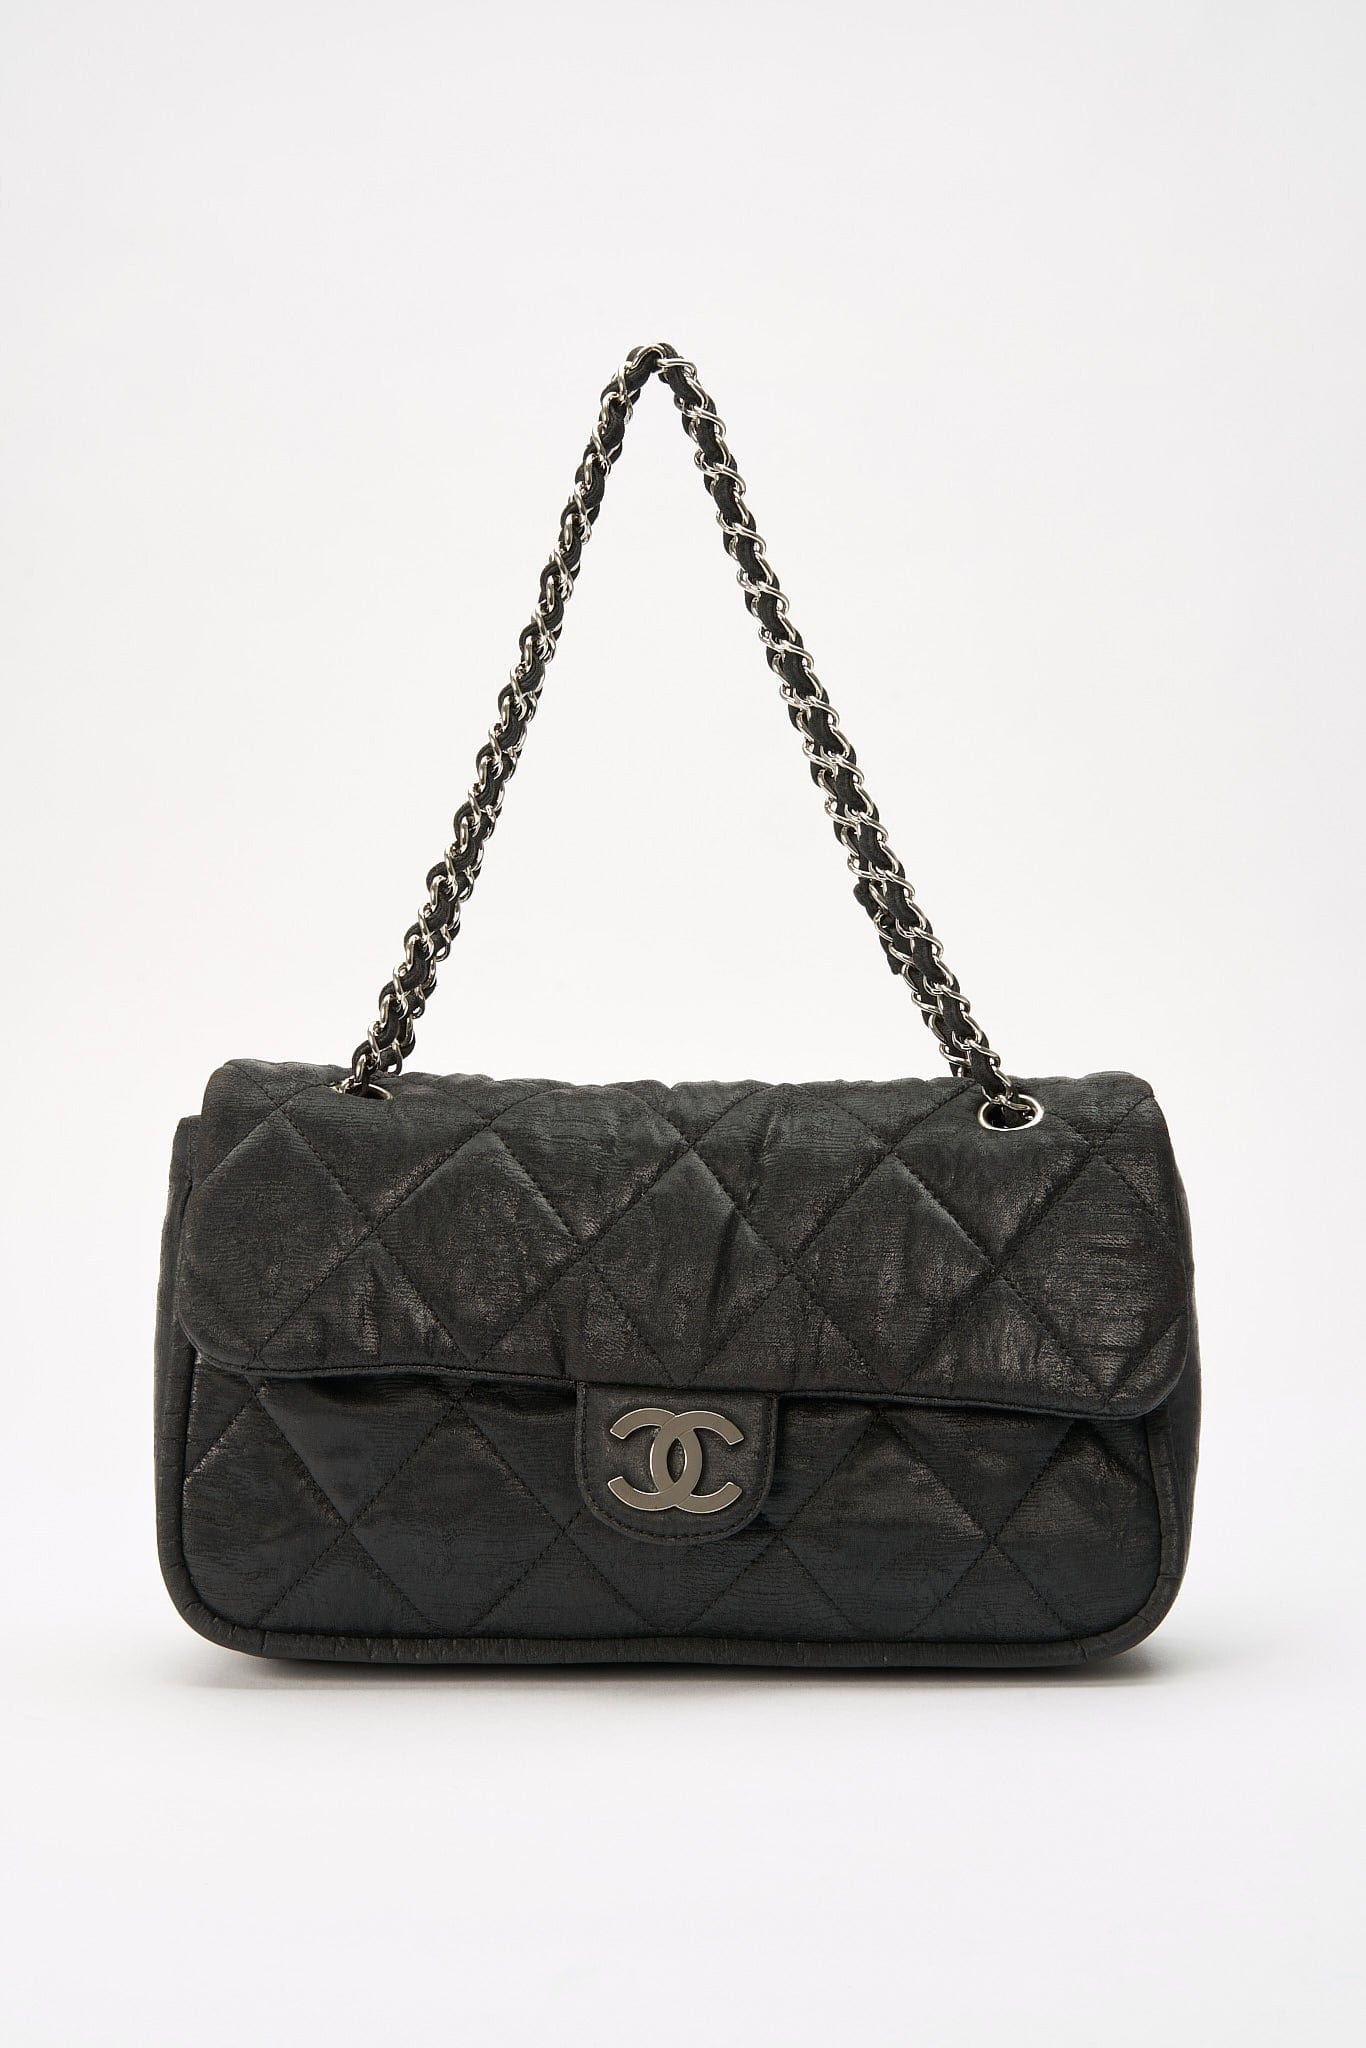 Chanel Black Textured Coated Nylon Single Flap Bag - Black – The Hosta